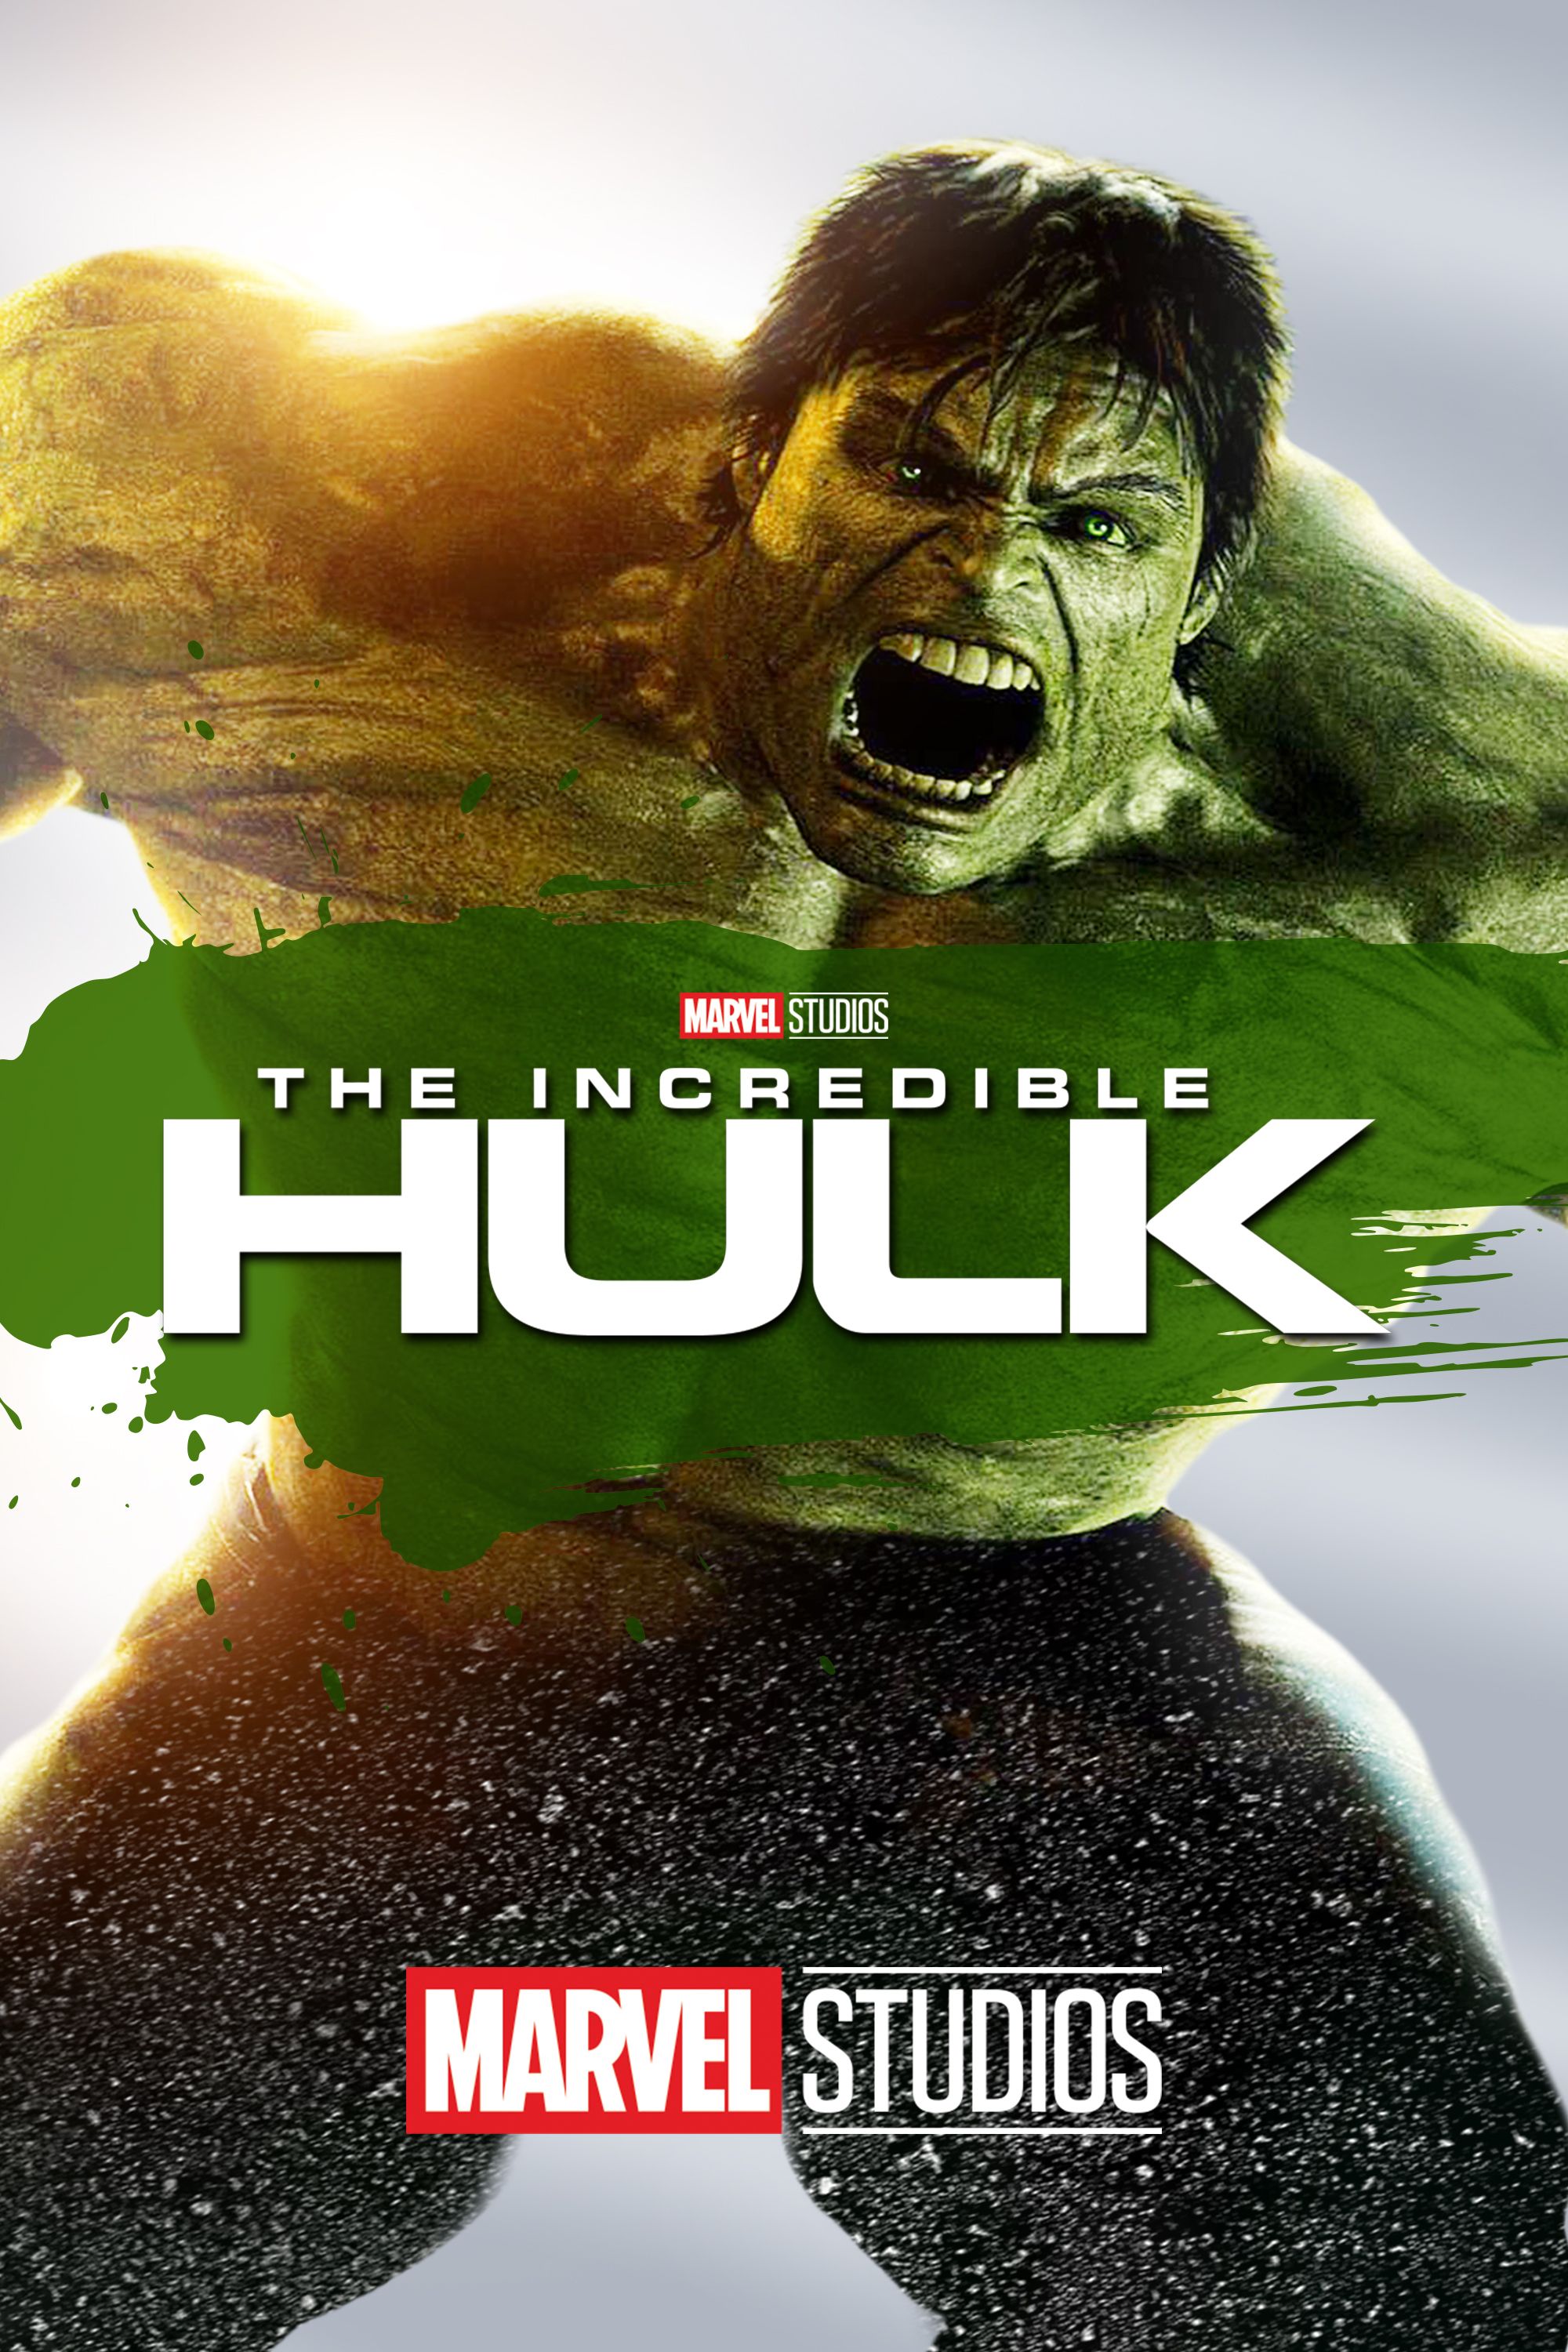 The Incredible Hulk 2008 Dual Audio Hindi Dubbed Full Movie